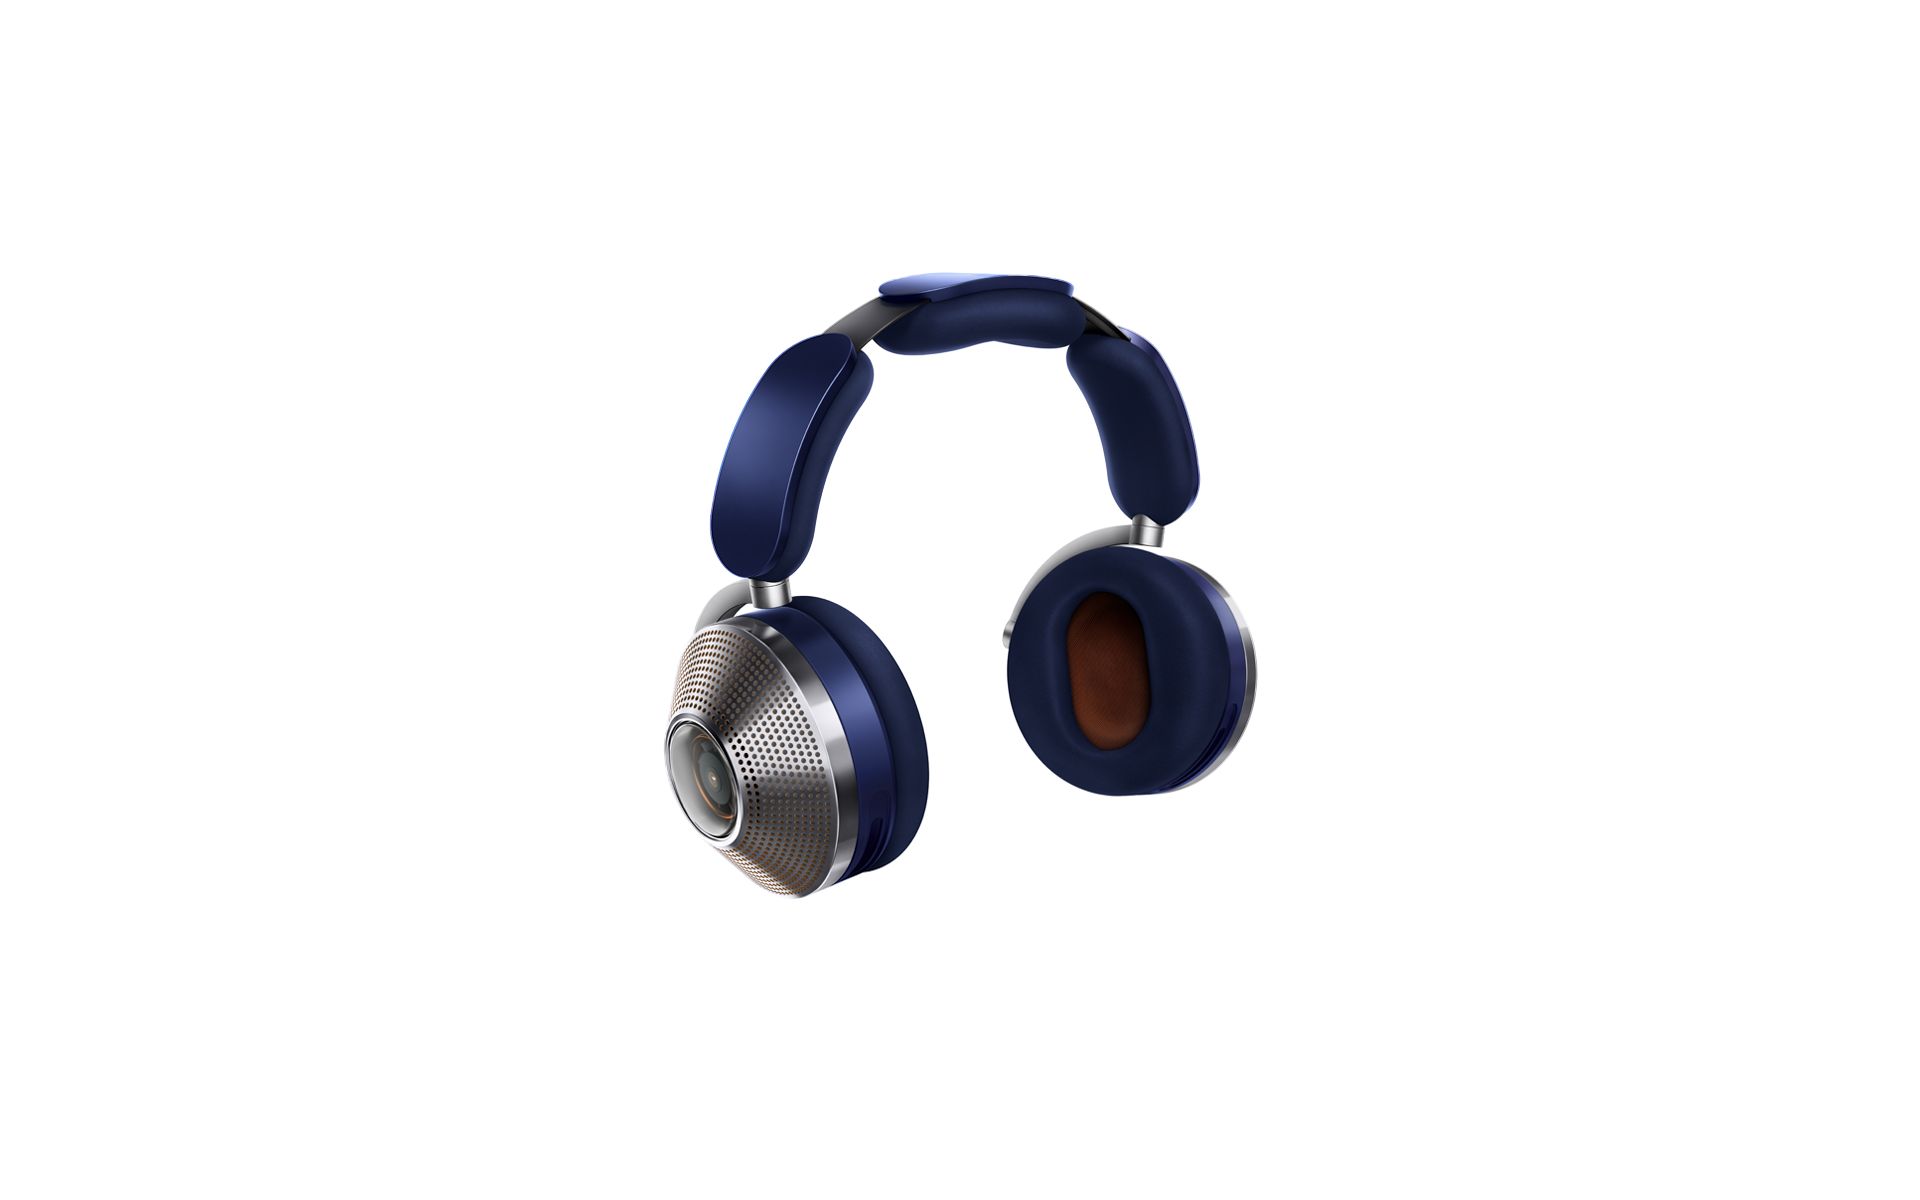 Dyson Zone™ noise cancelling headphones (Prussian blue/Bright copper)